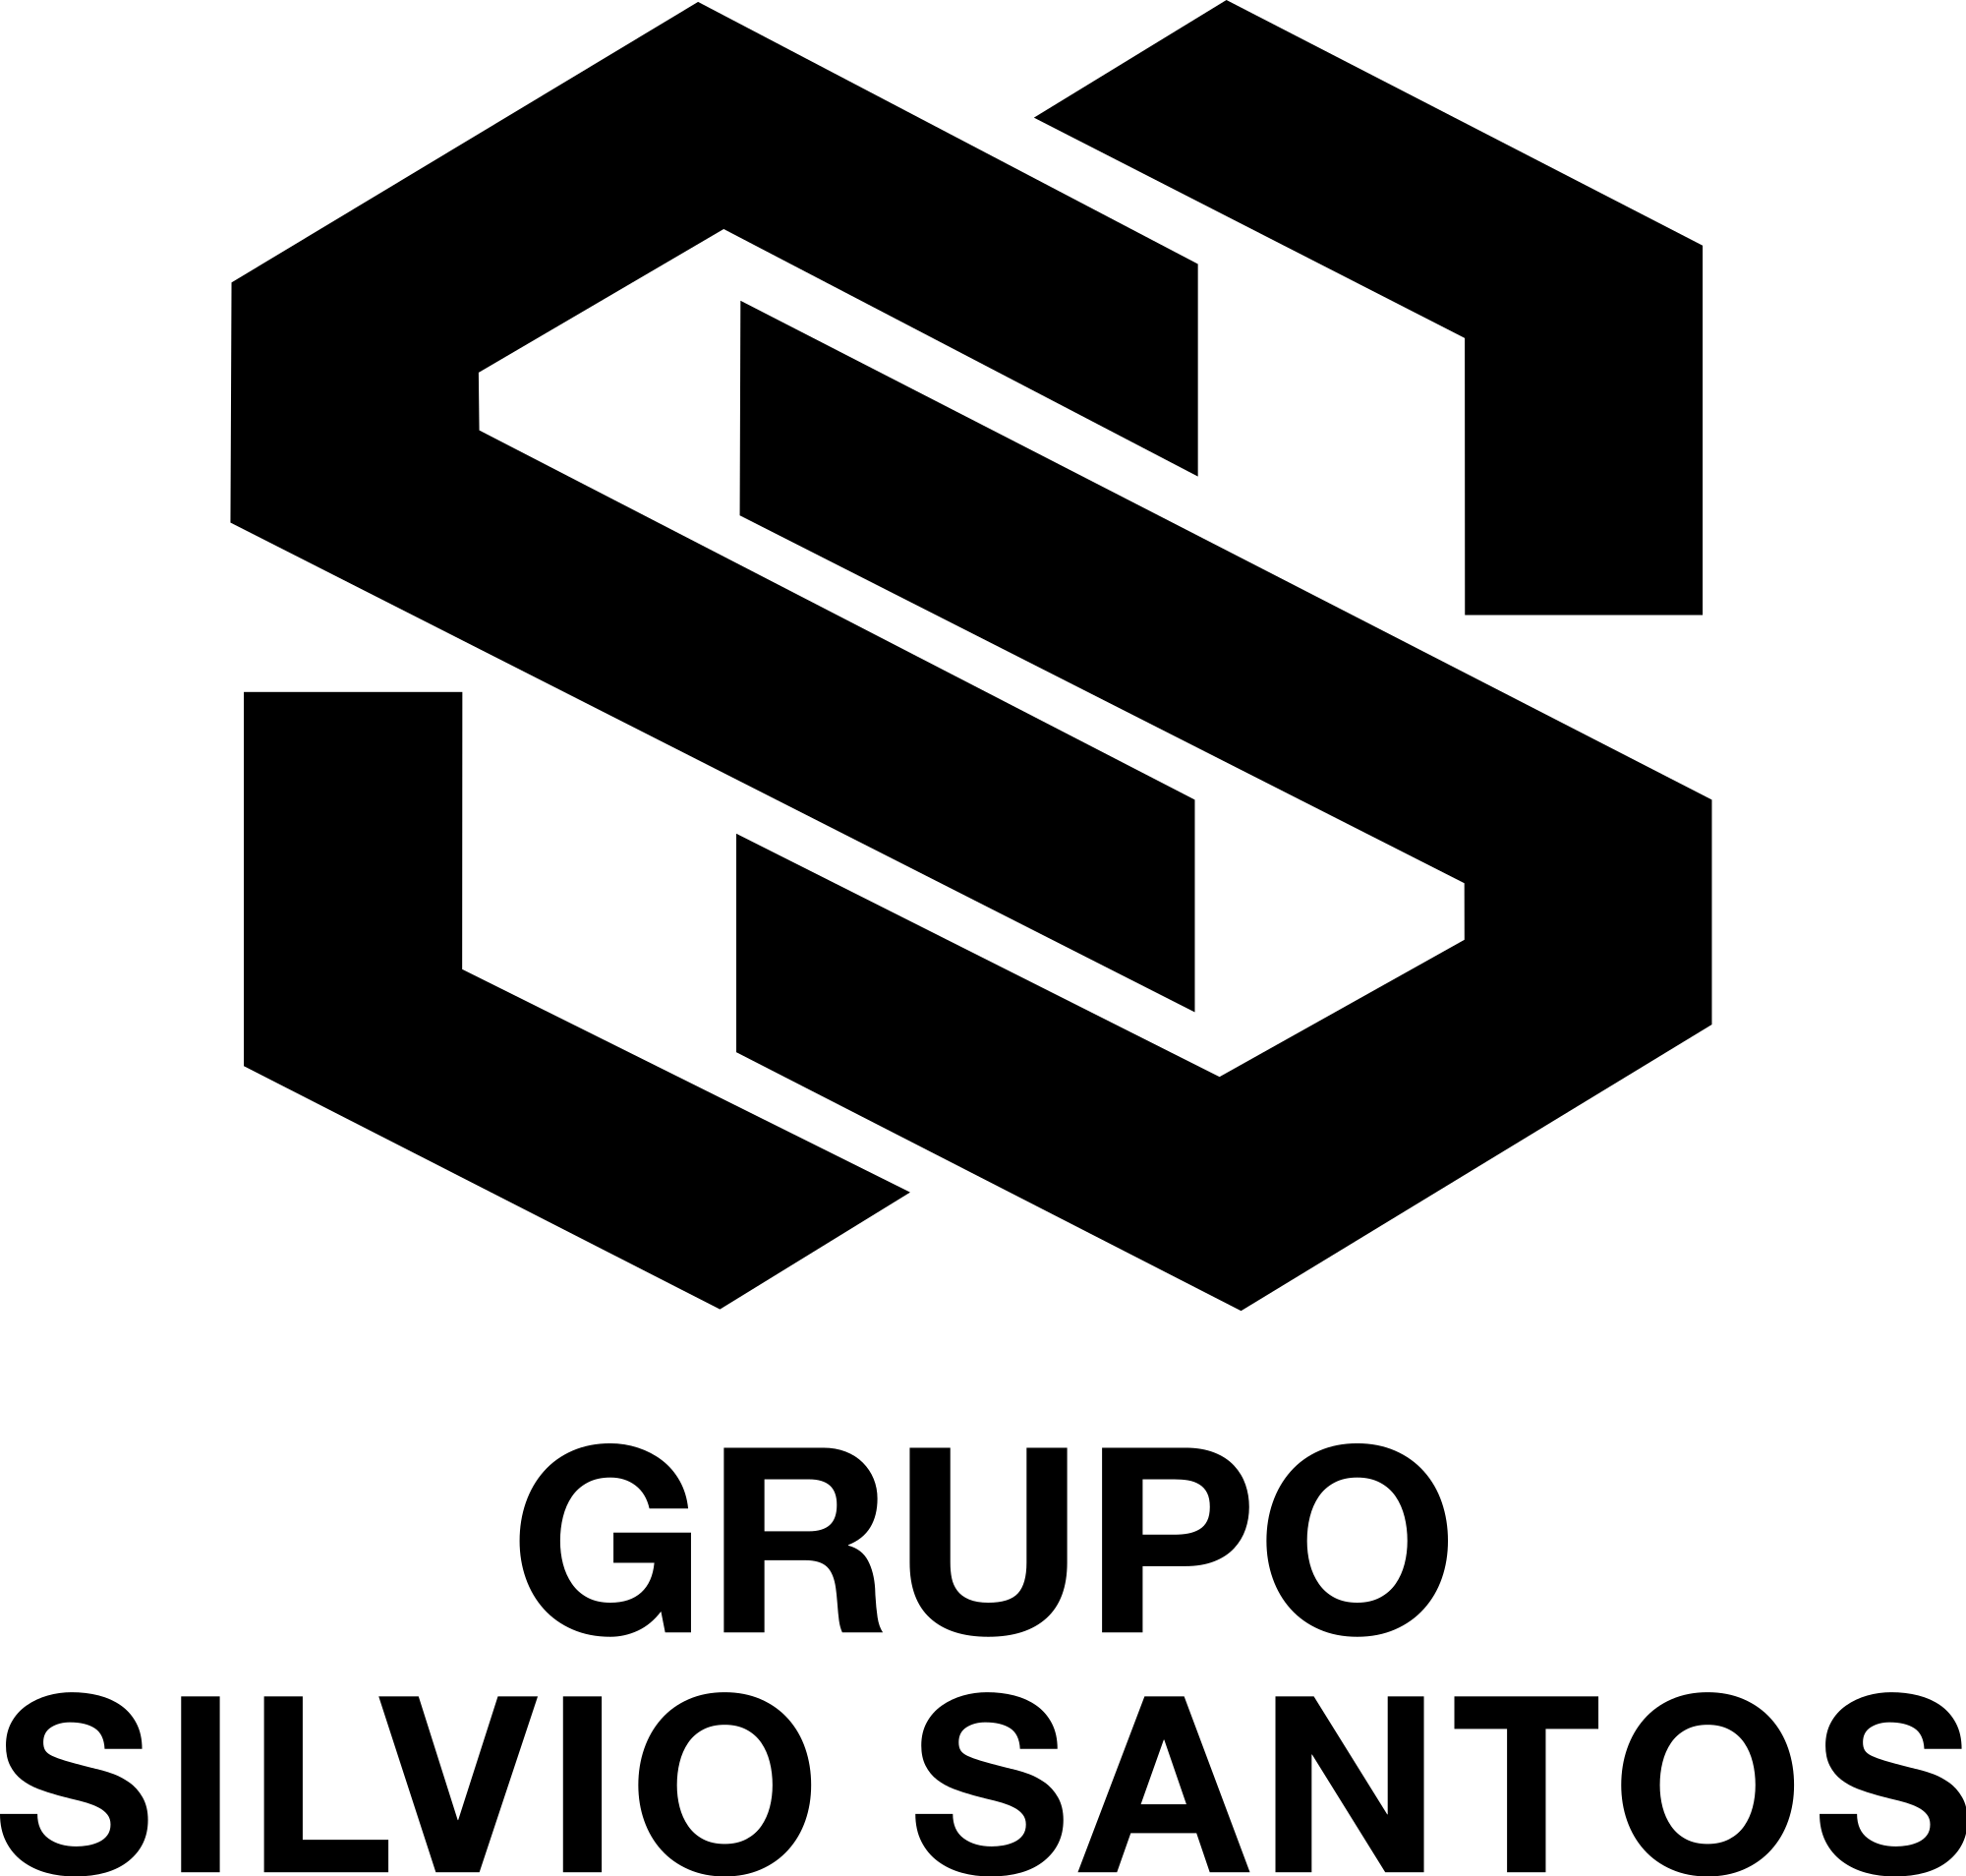 Santos Logo - File:Grupo Silvio Santos logo.svg - Wikimedia Commons